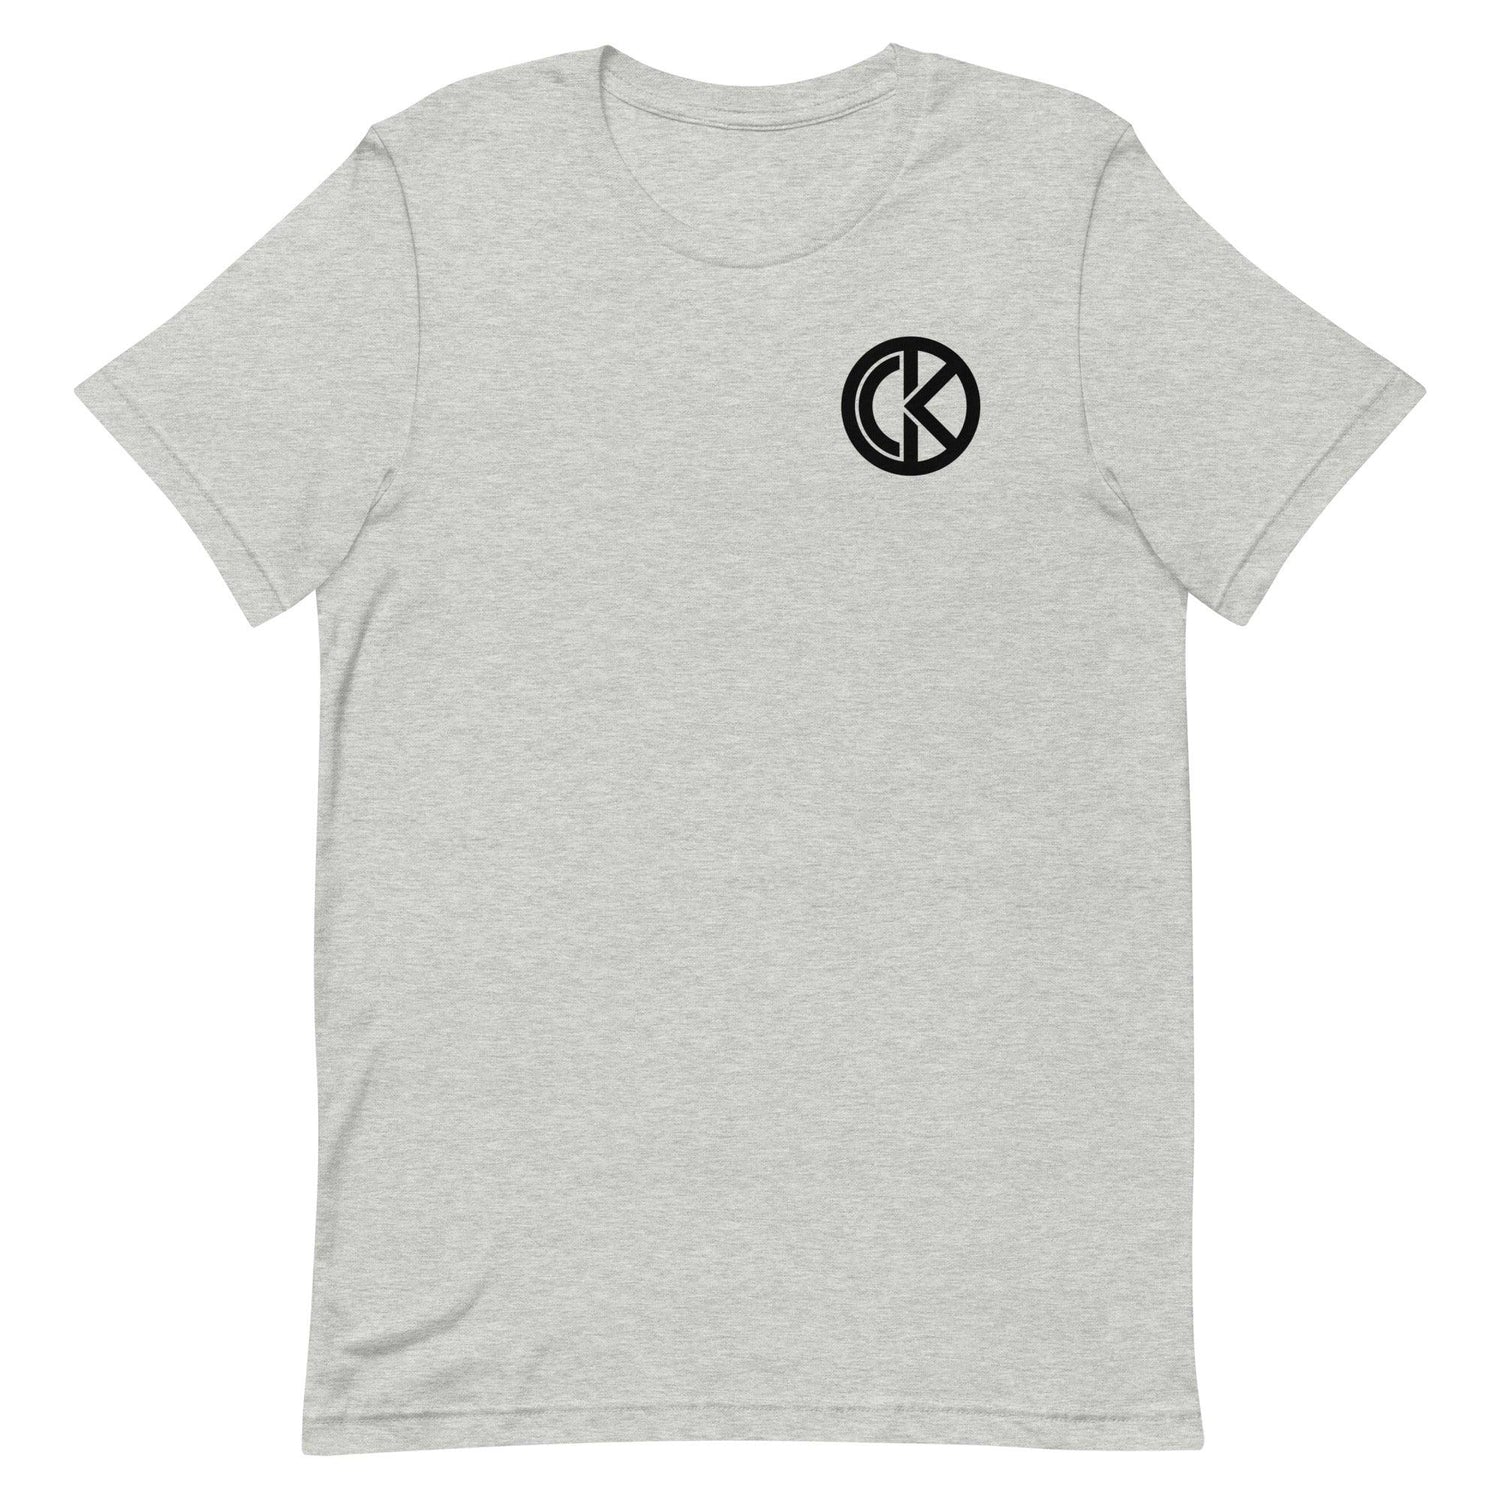 Caitlyn Kroll "CK" t-shirt - Fan Arch